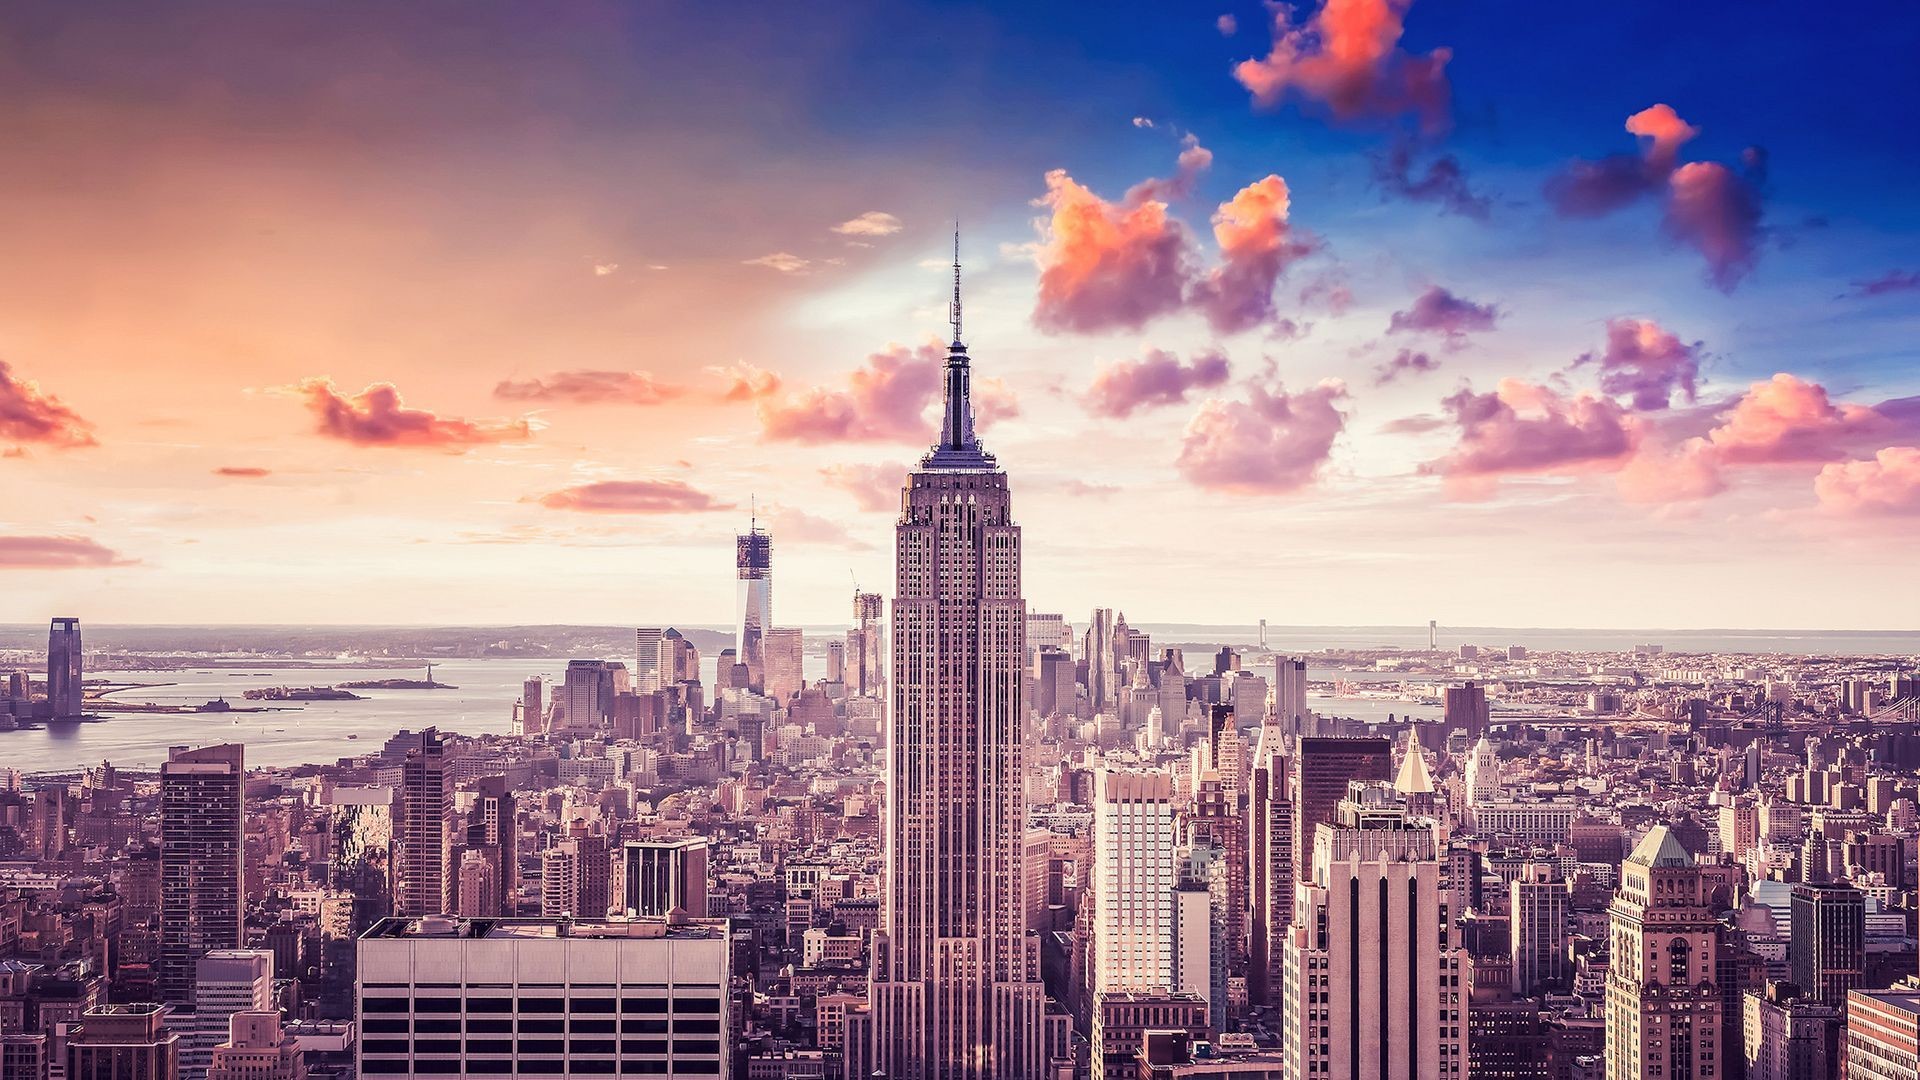 Skyline New York City wallpaper wallpaper free download 19201080